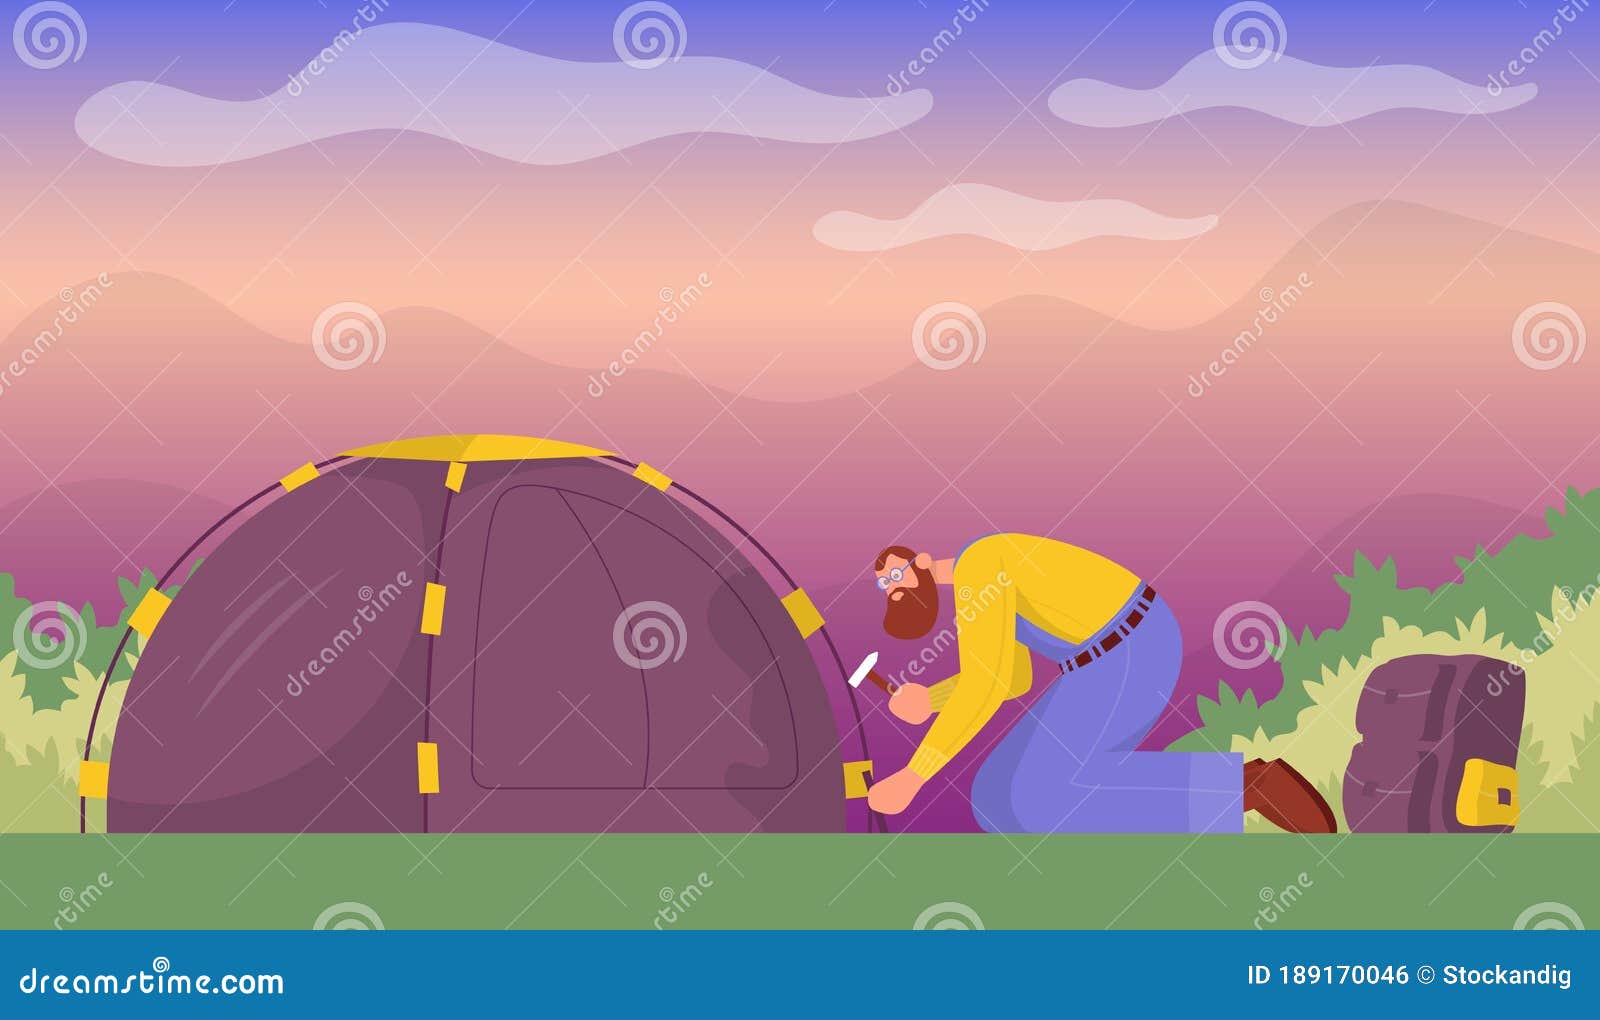 Put a Tent cartoon. Put up a Tent картинки для детей. Put up a Tent.